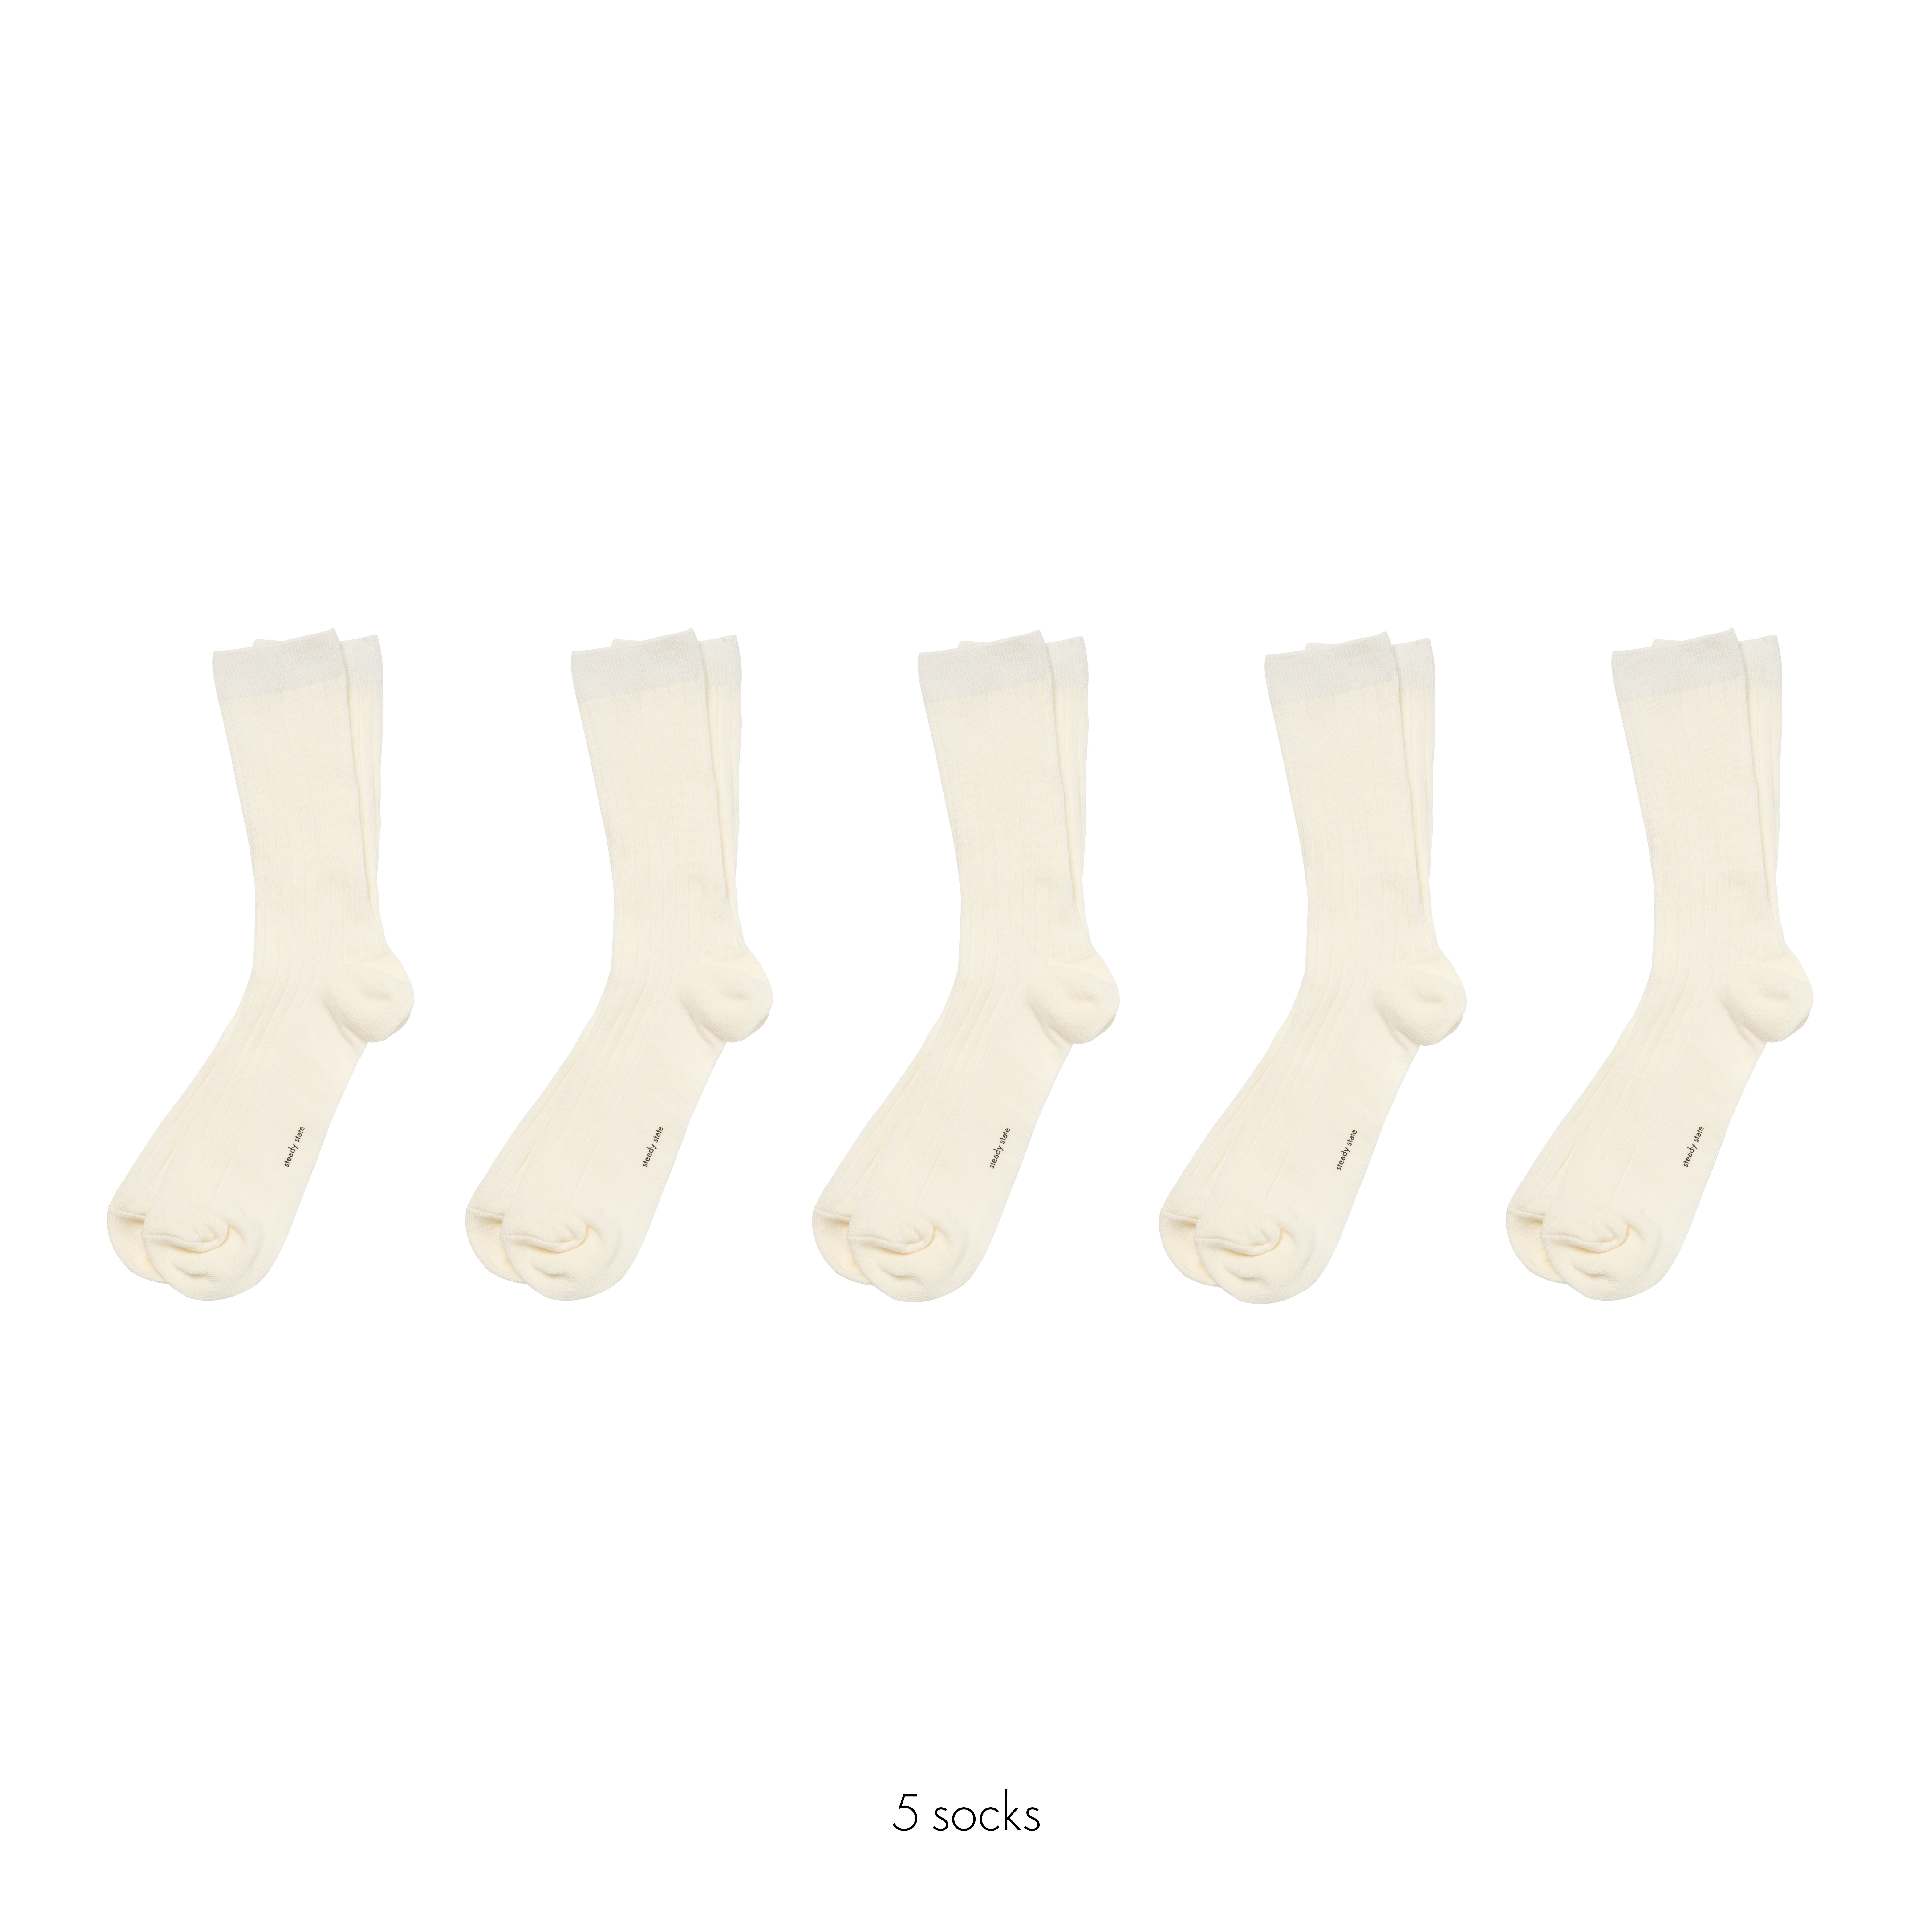 5 Socks Cotton Creamy